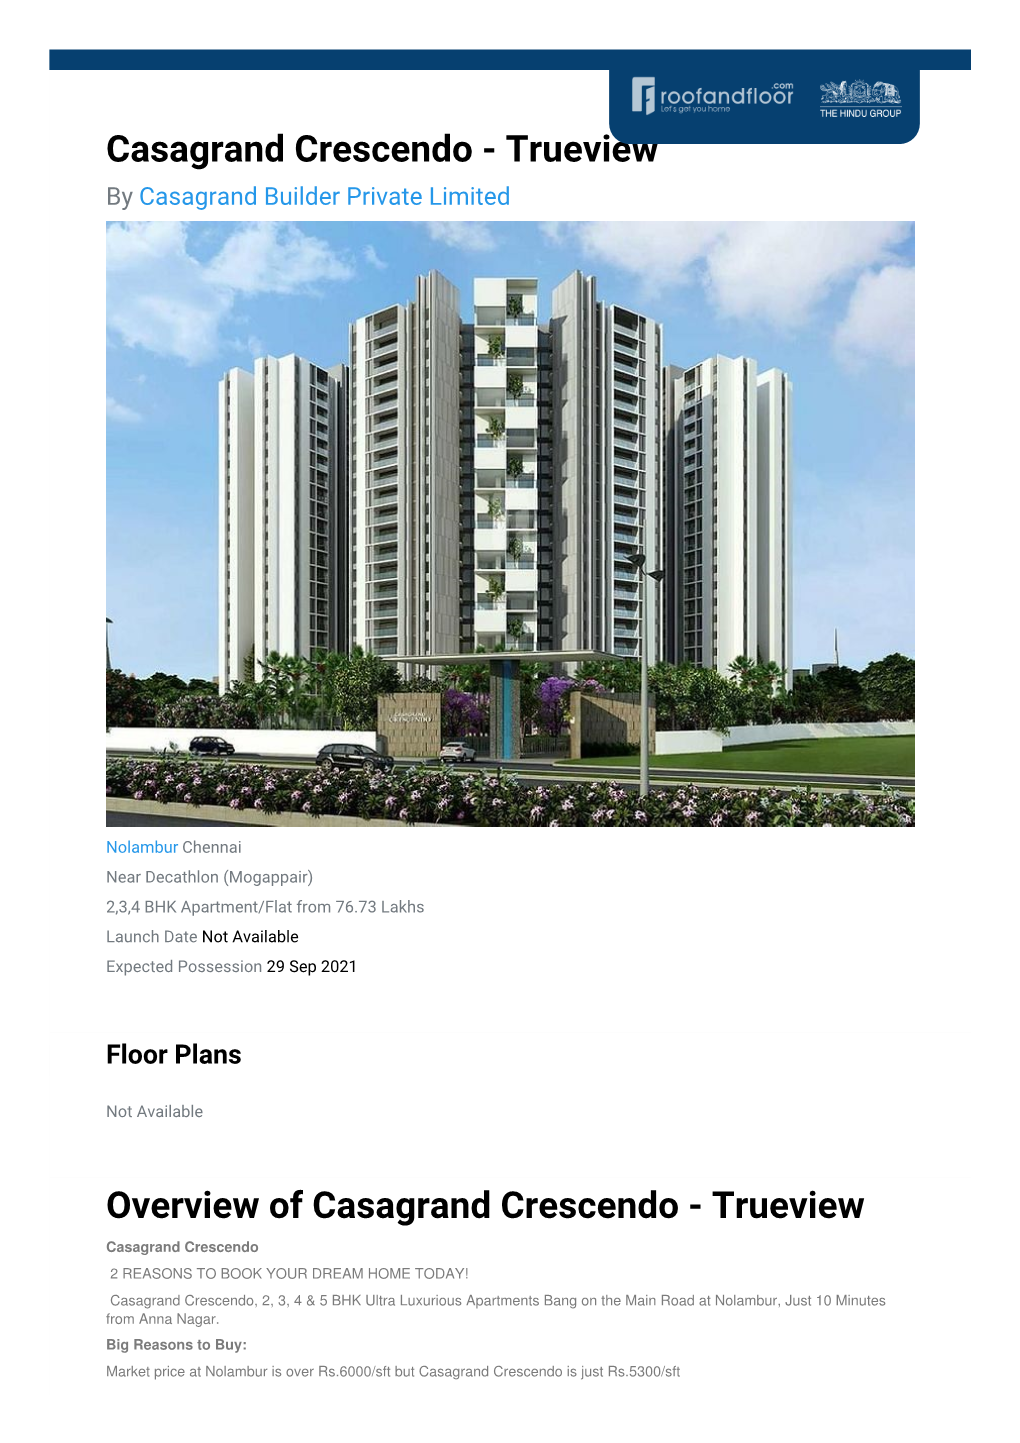 Casagrand Crescendo - Trueview by Casagrand Builder Private Limited